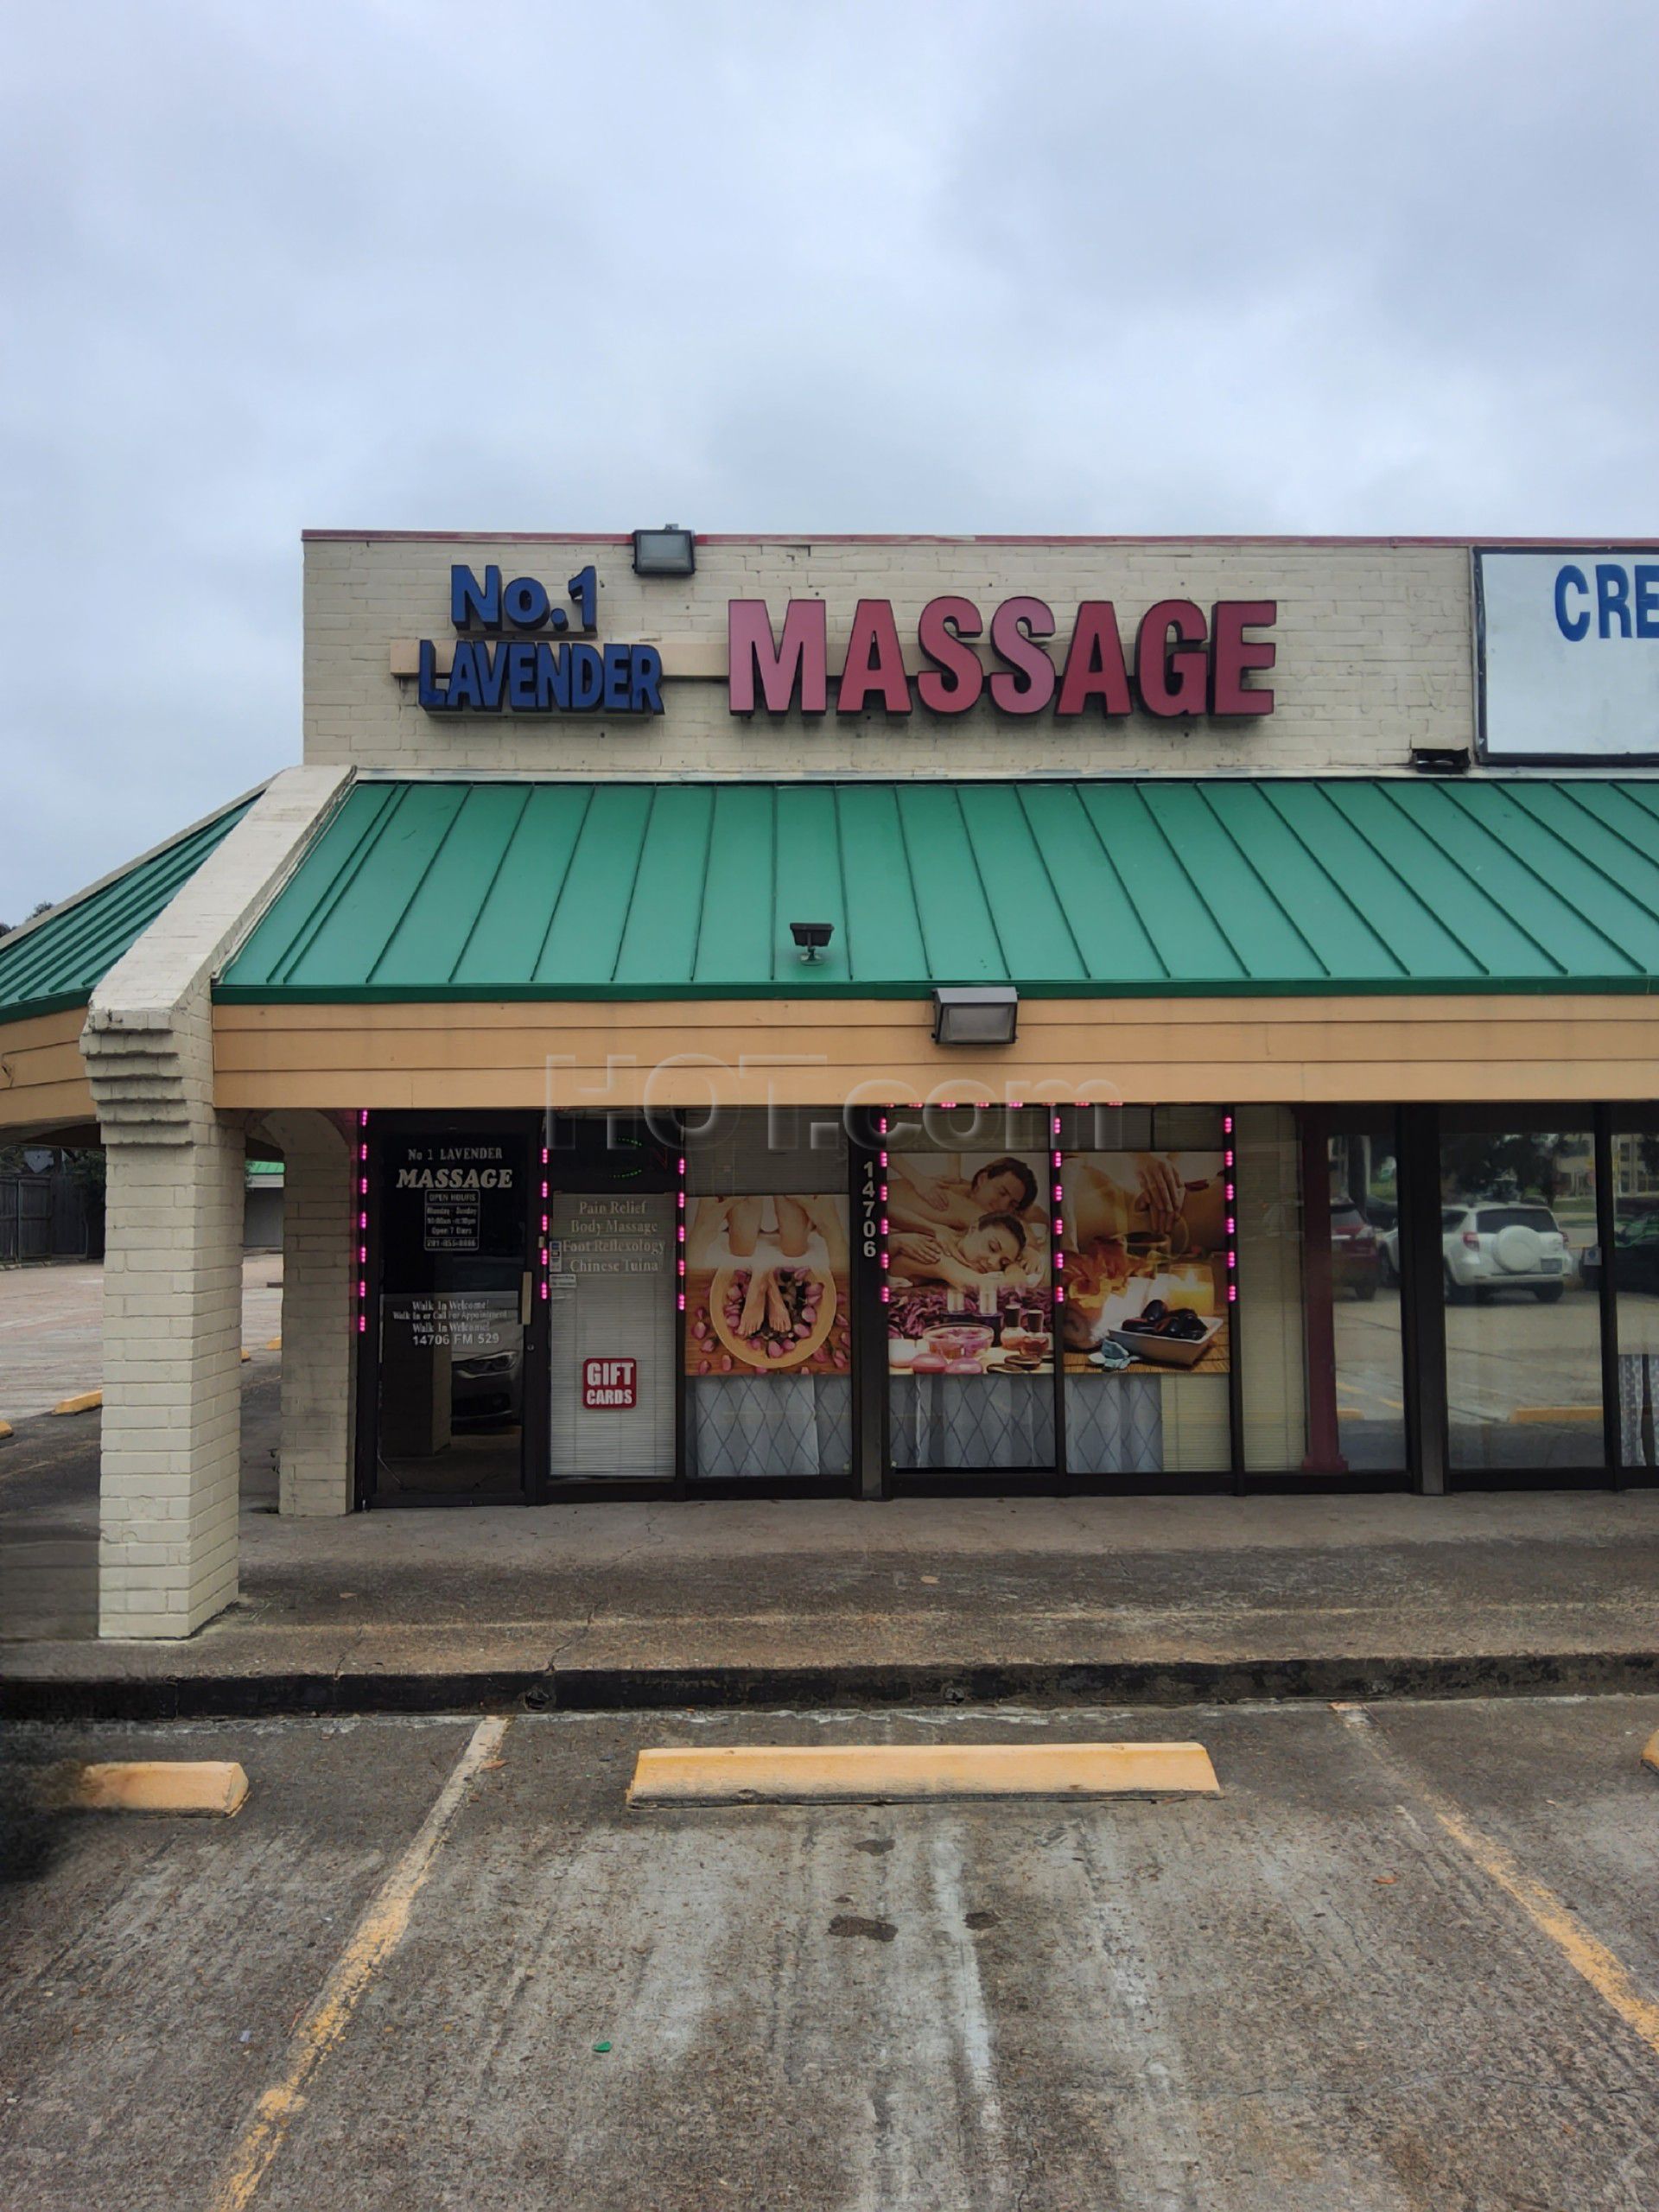 Houston, Texas No. 1 Lavender Massage